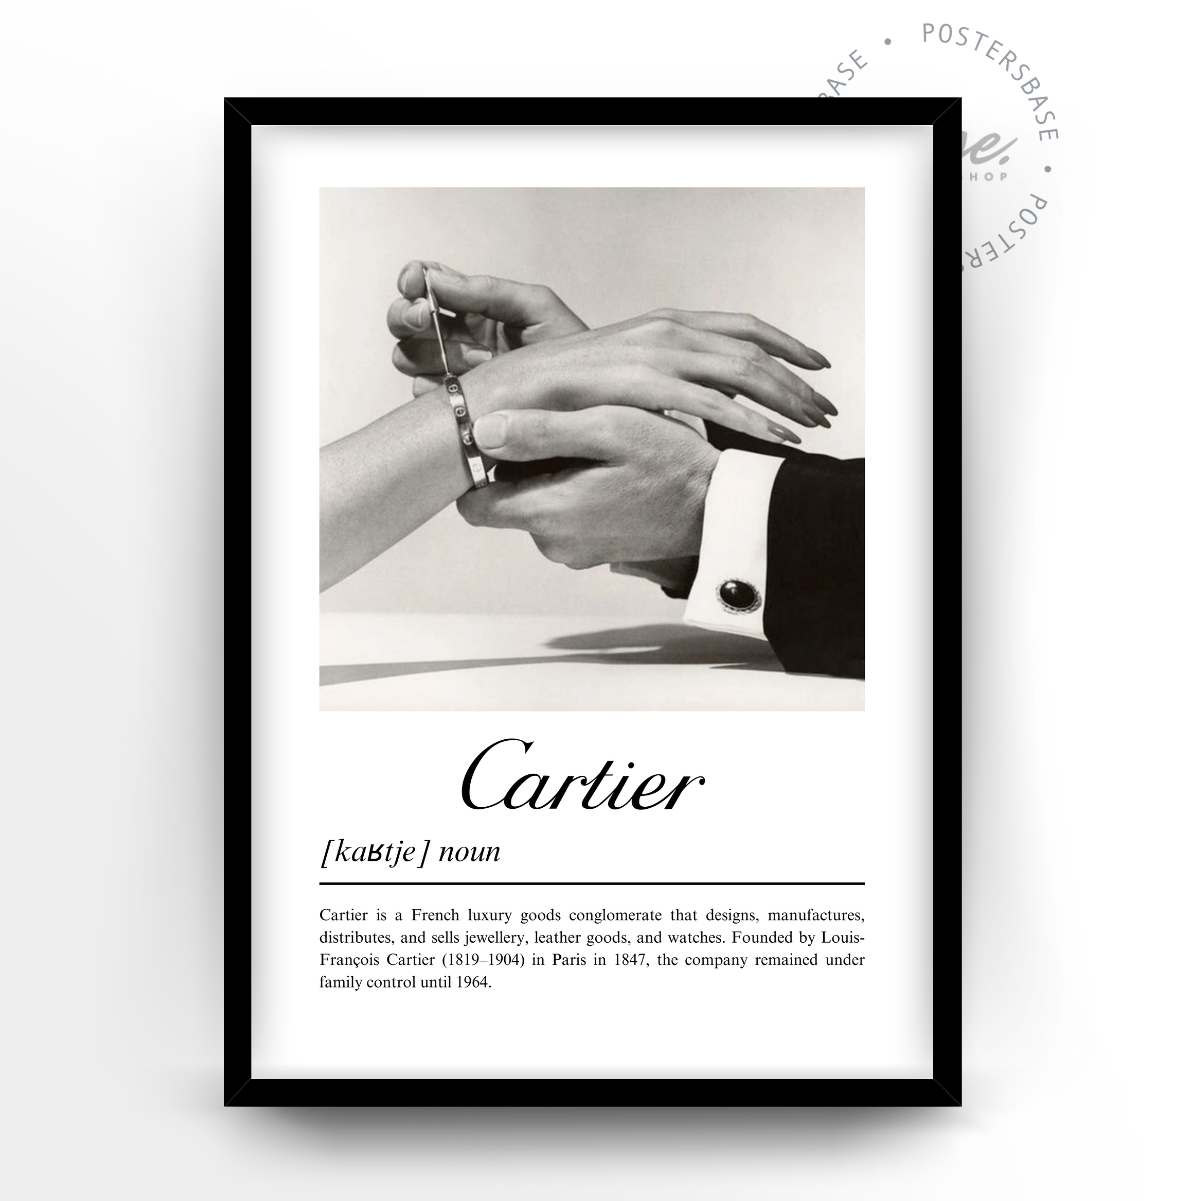 Cartier History